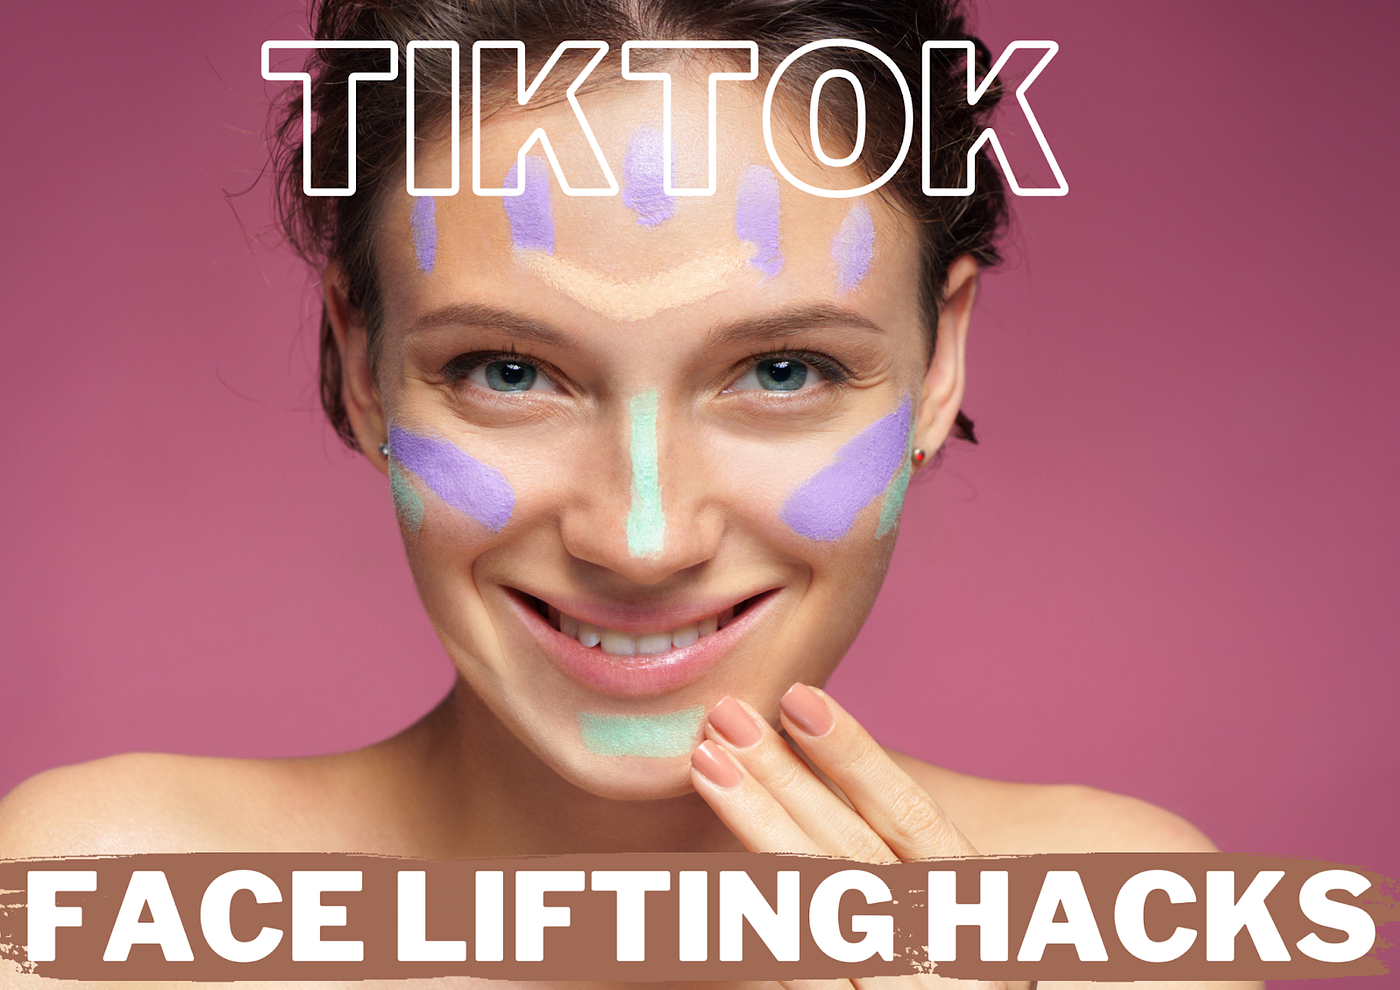 Tiktok “Face Lifting” Concealer Hack | by BeautifuLady | Medium